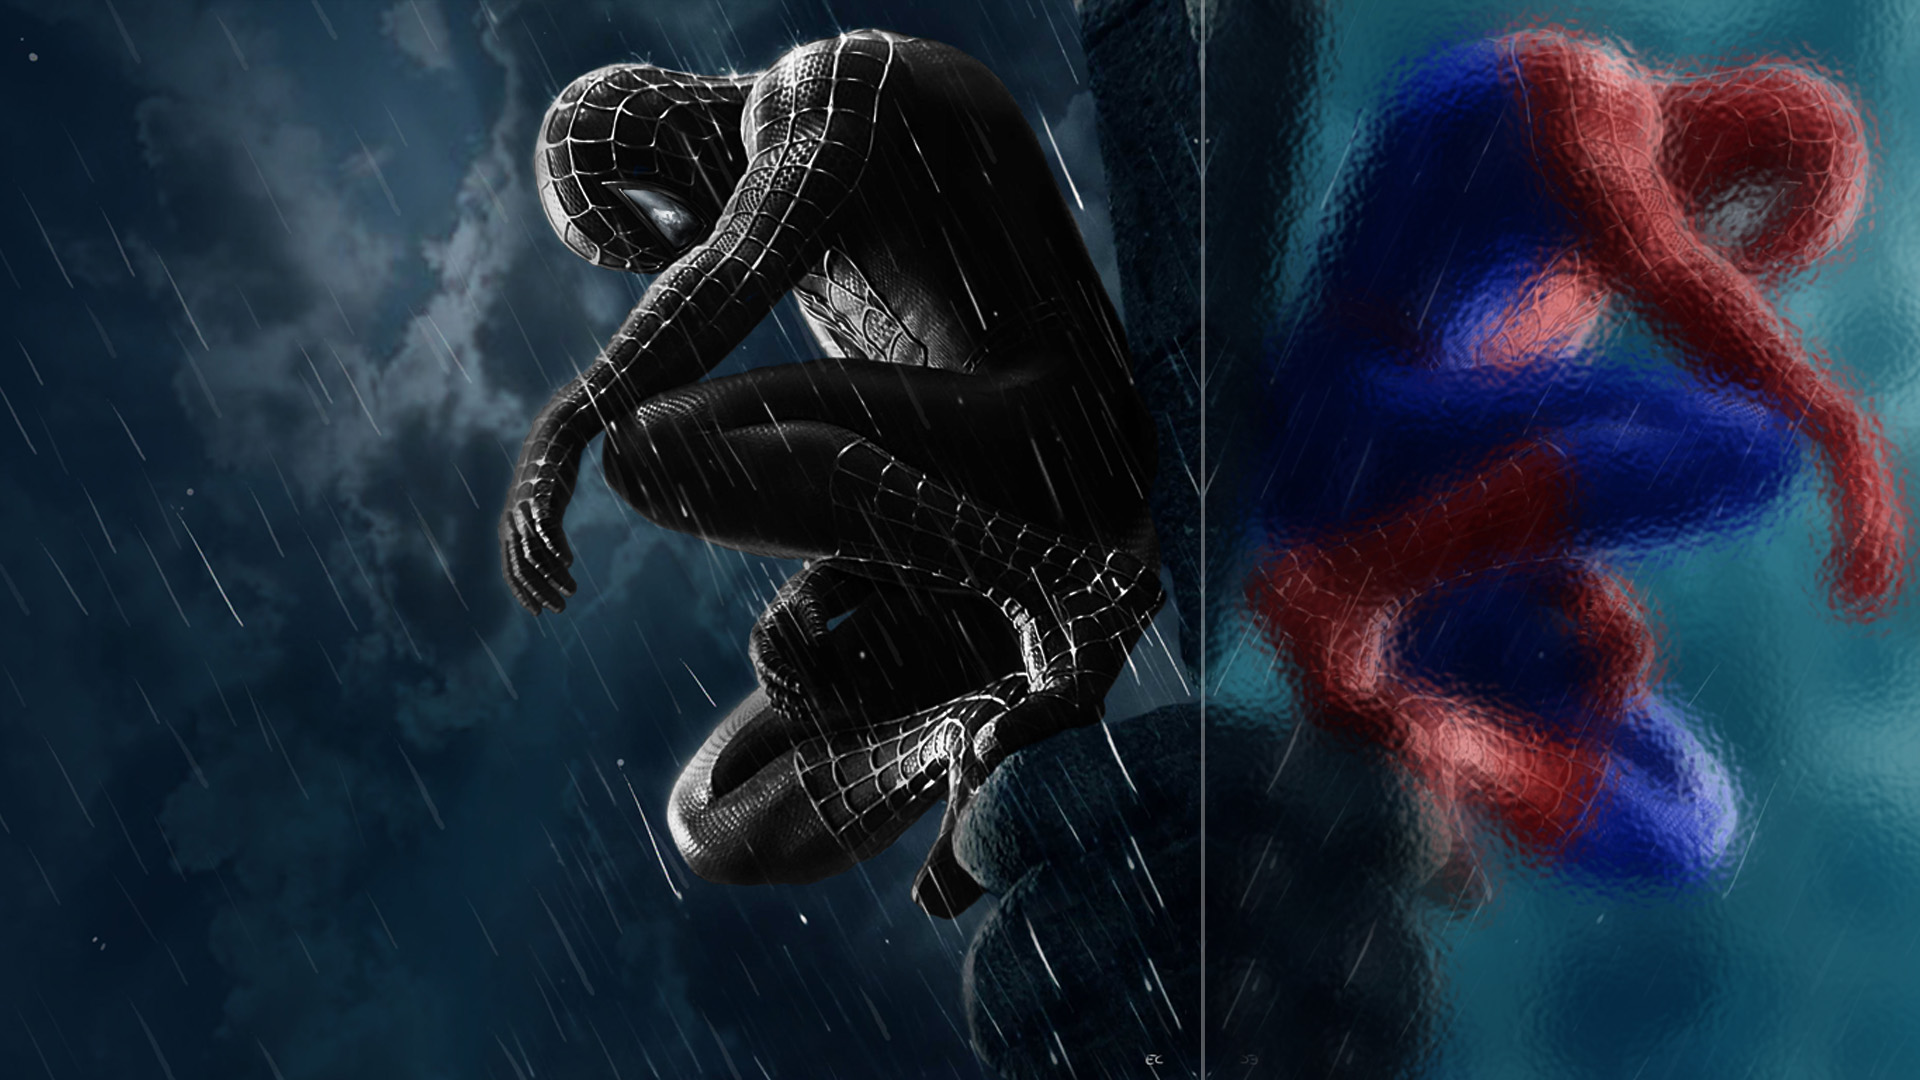 Black Spiderman Iphone Wallpapers Hd | Pixelstalk.net